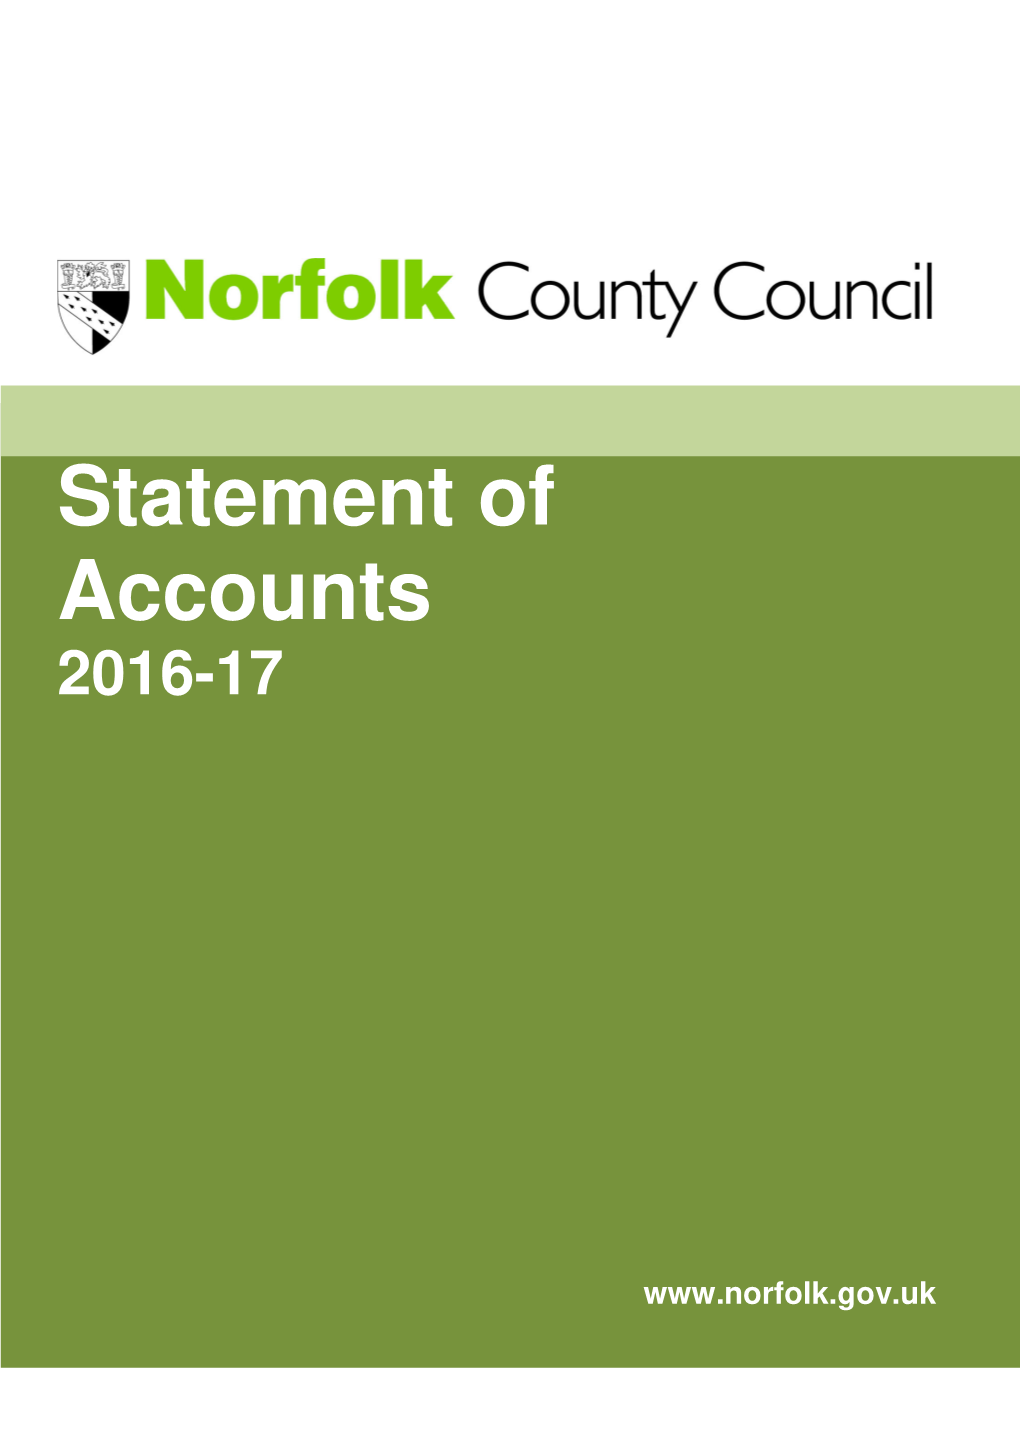 Statement of Accounts 2016-17